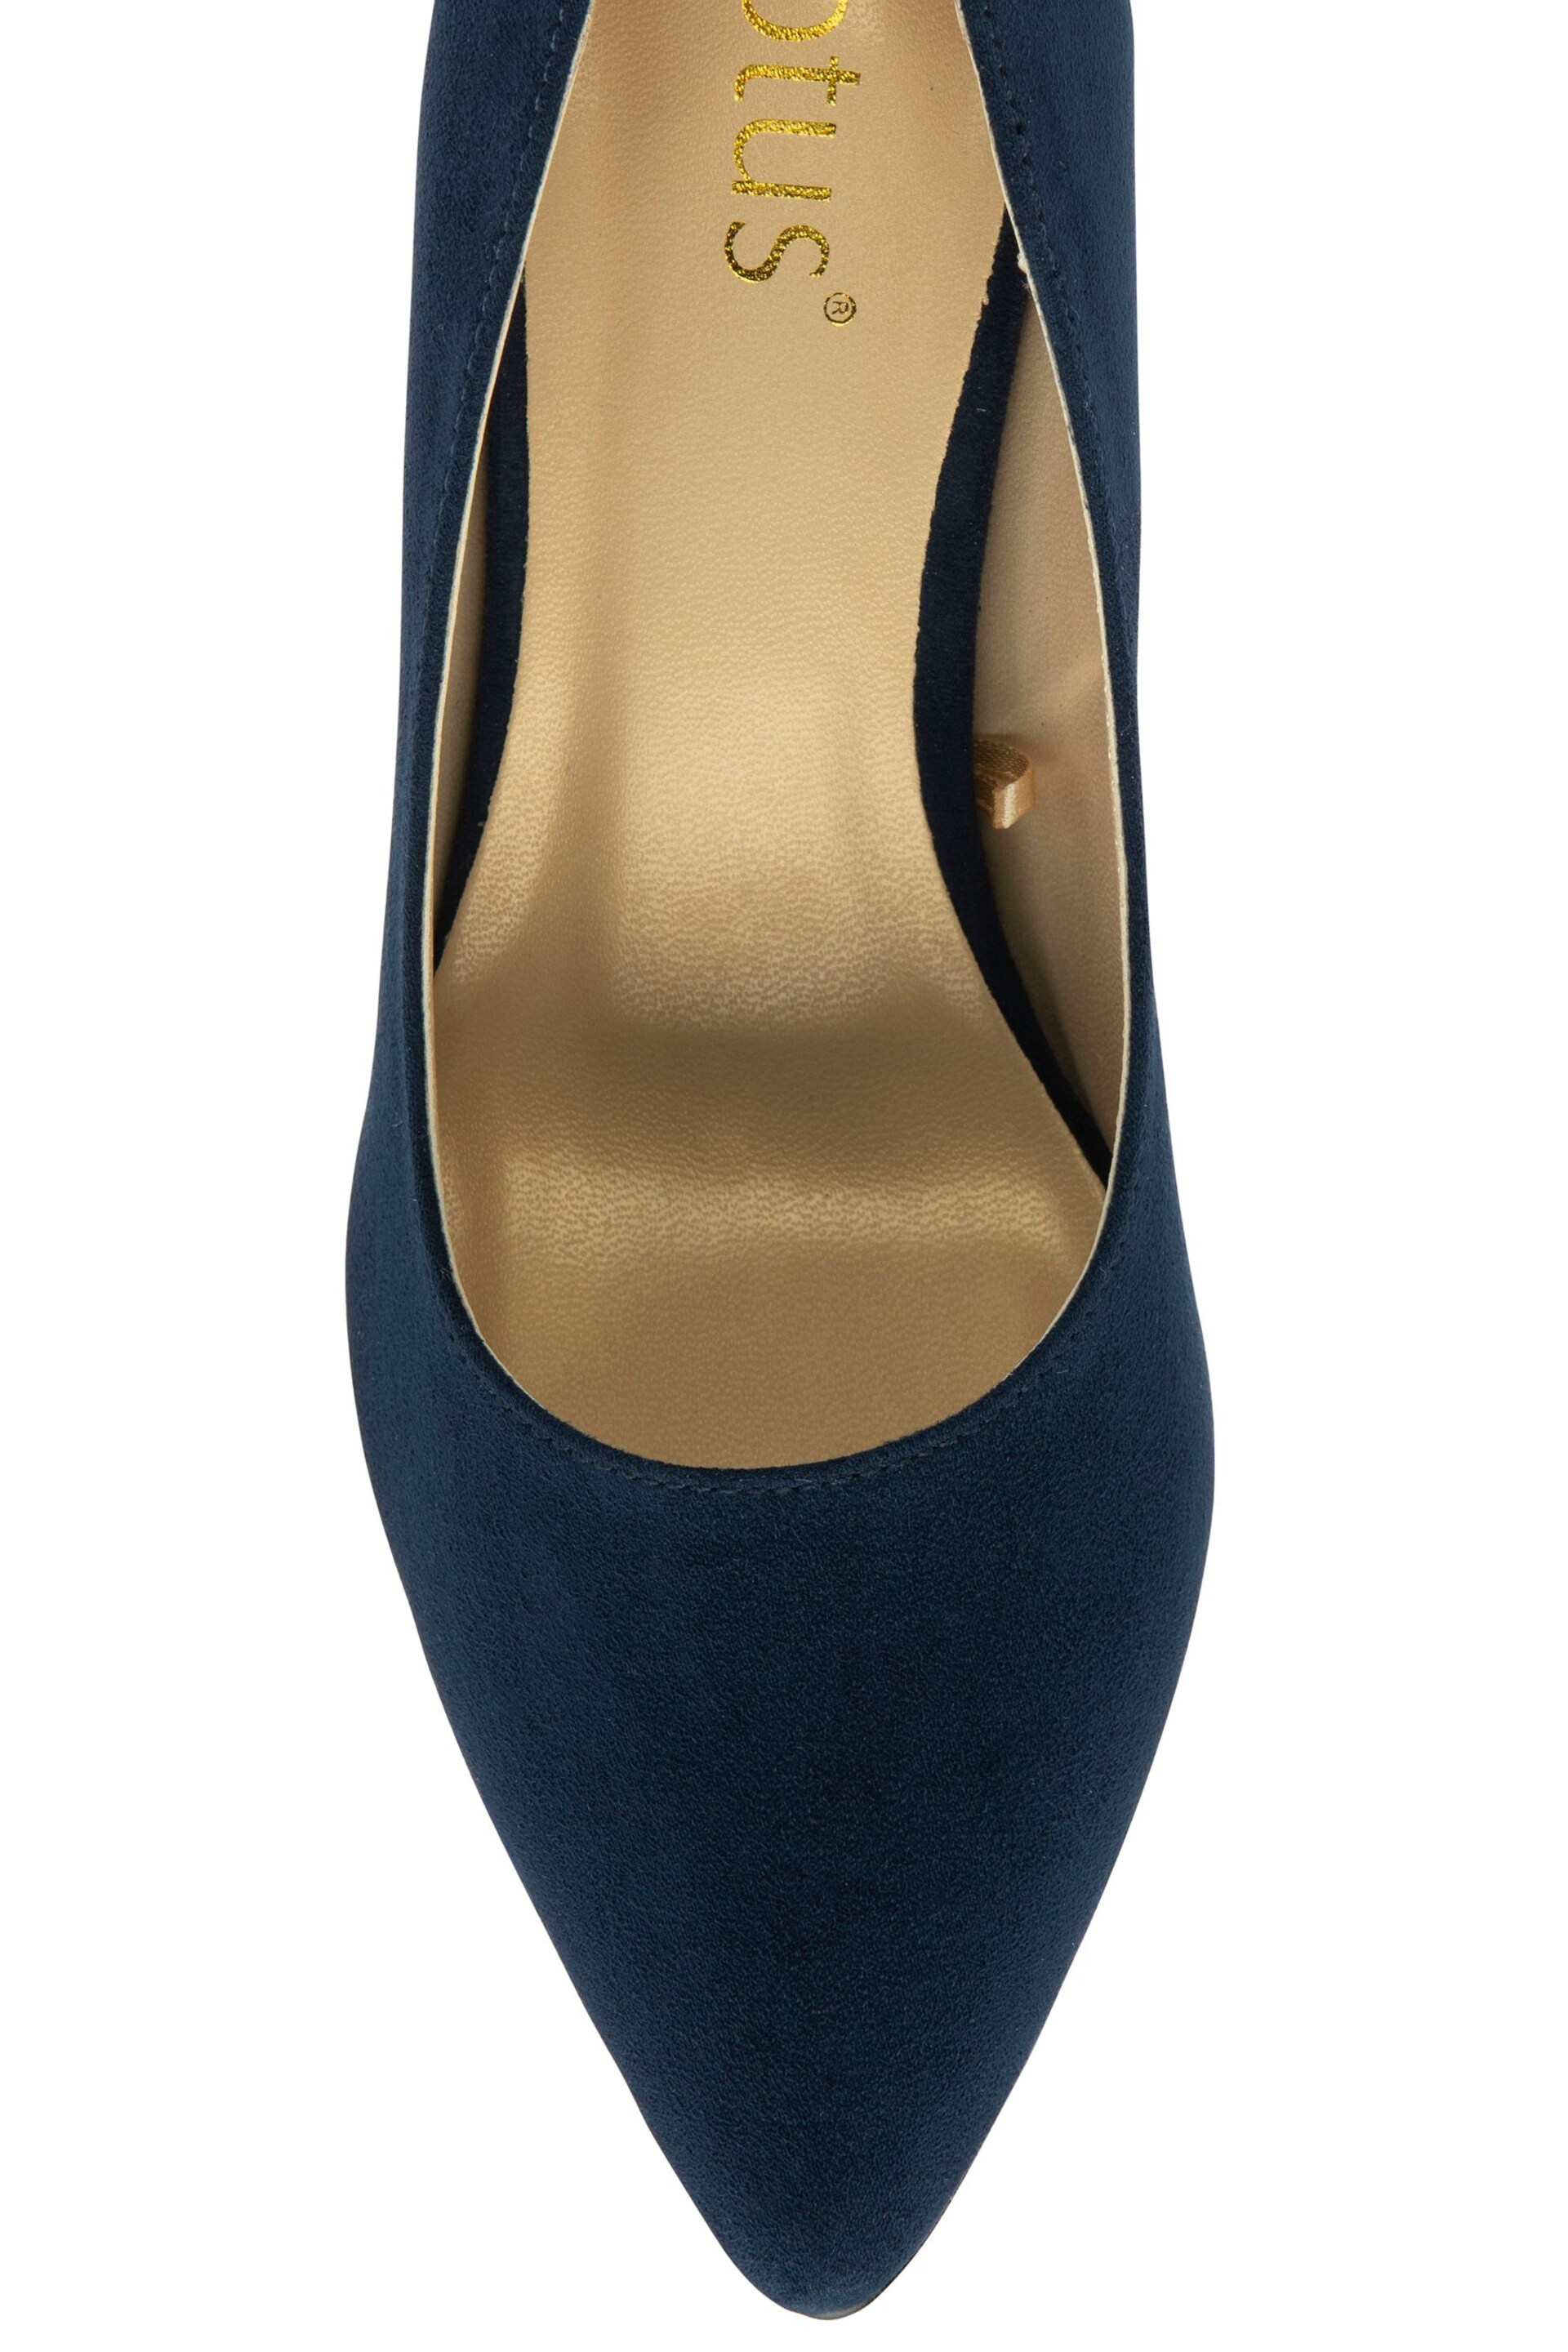 Lotus Blue Stiletto-Heel Court Shoes - Image 4 of 4